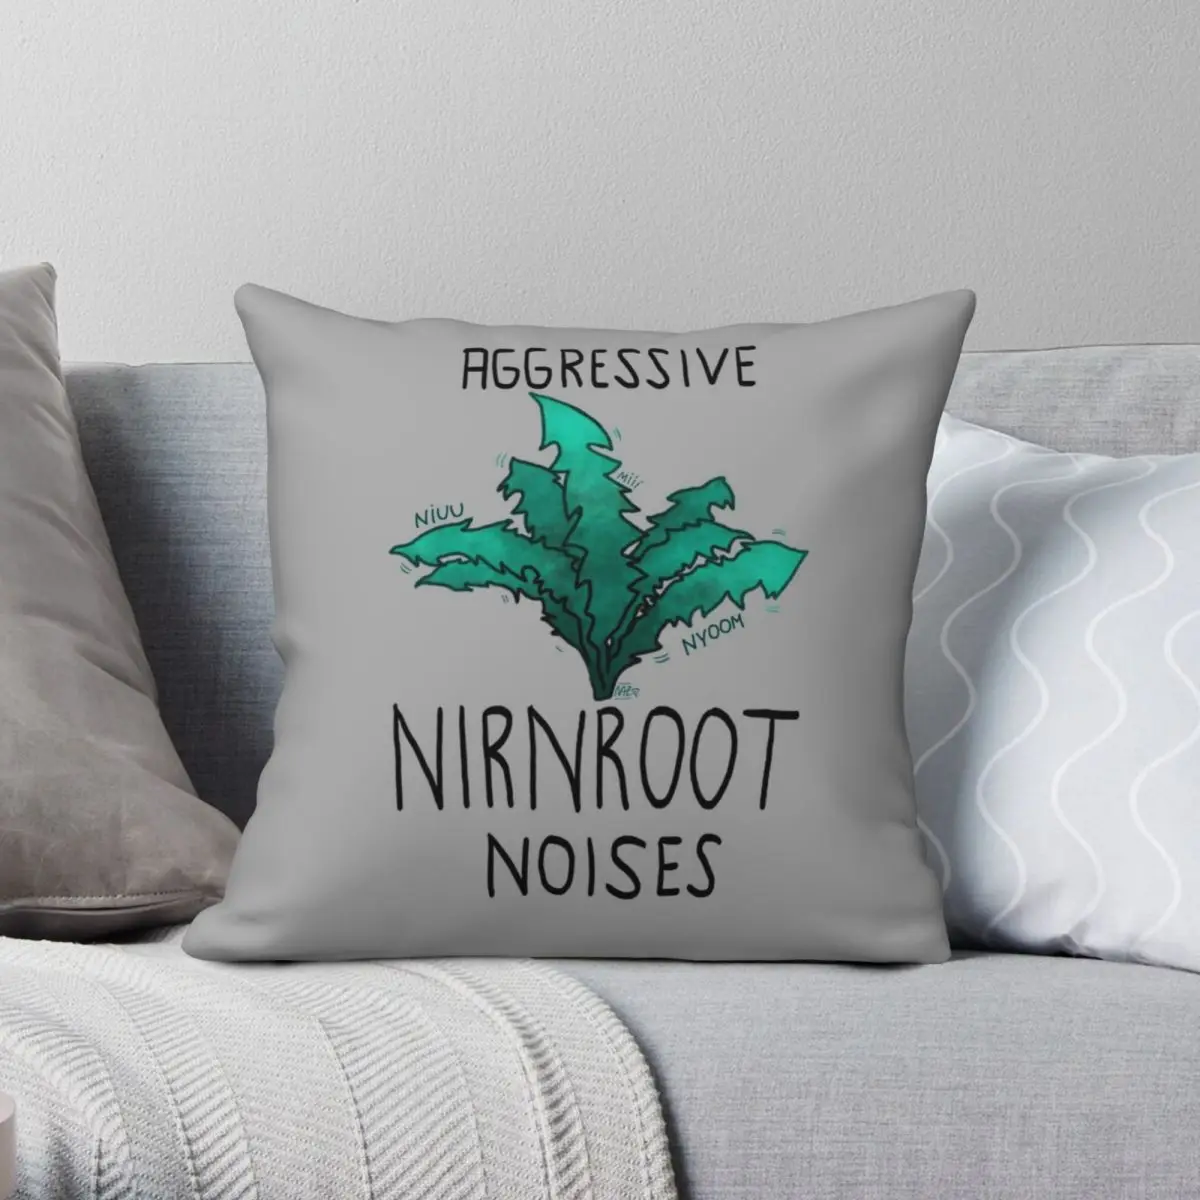 

Aggressive Nirnroot Noises Square Pillowcase Polyester Linen Velvet Creative Zip Decor Throw Pillow Case Home Cushion Case